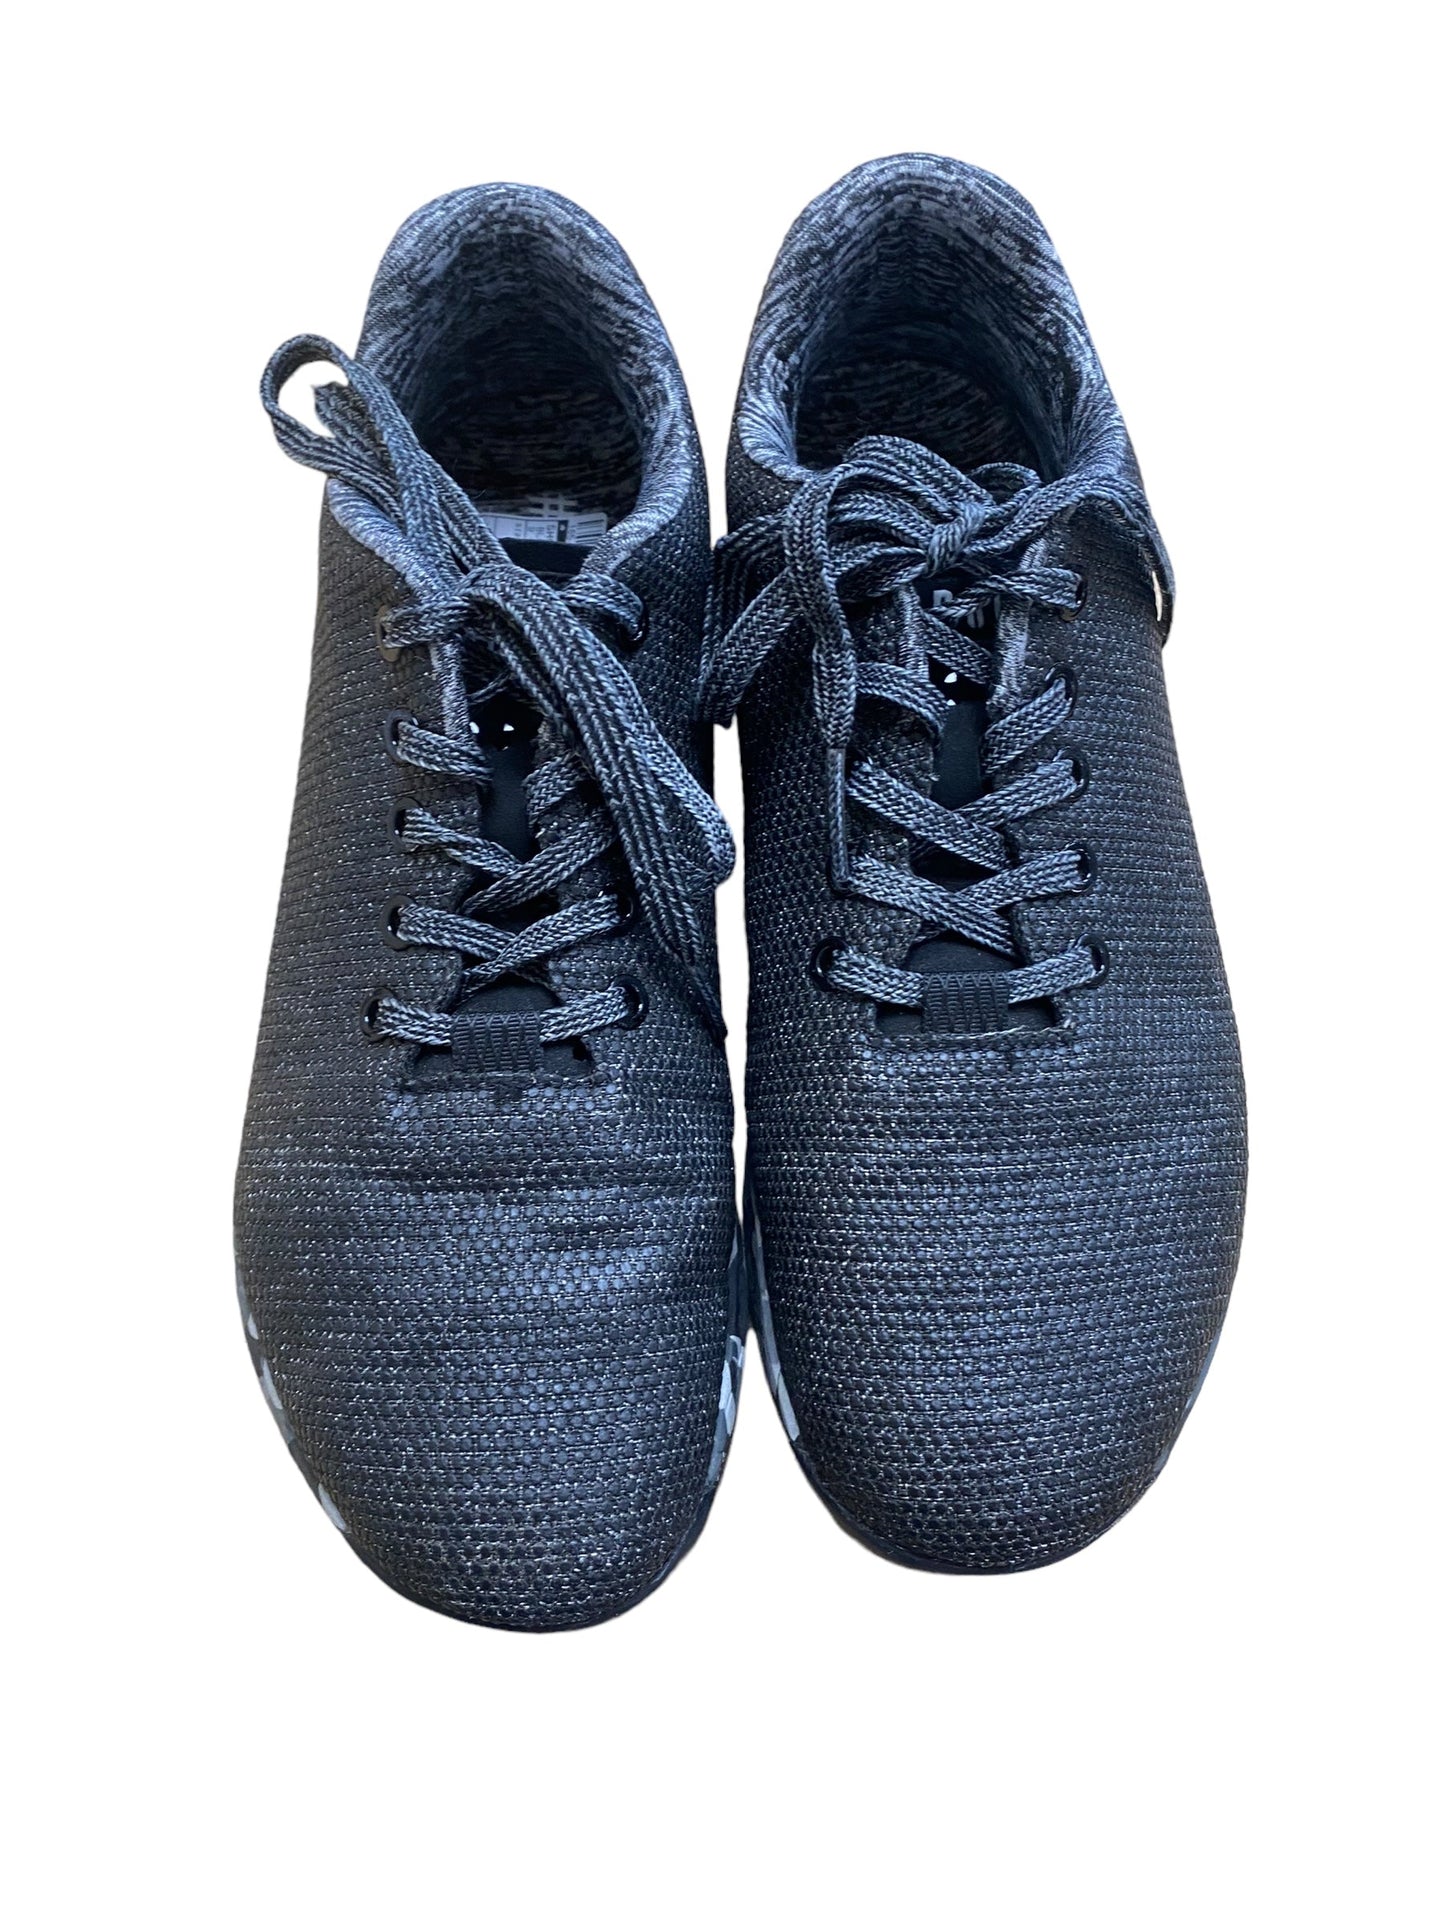 Black Shoes Athletic Clothes Mentor, Size 9